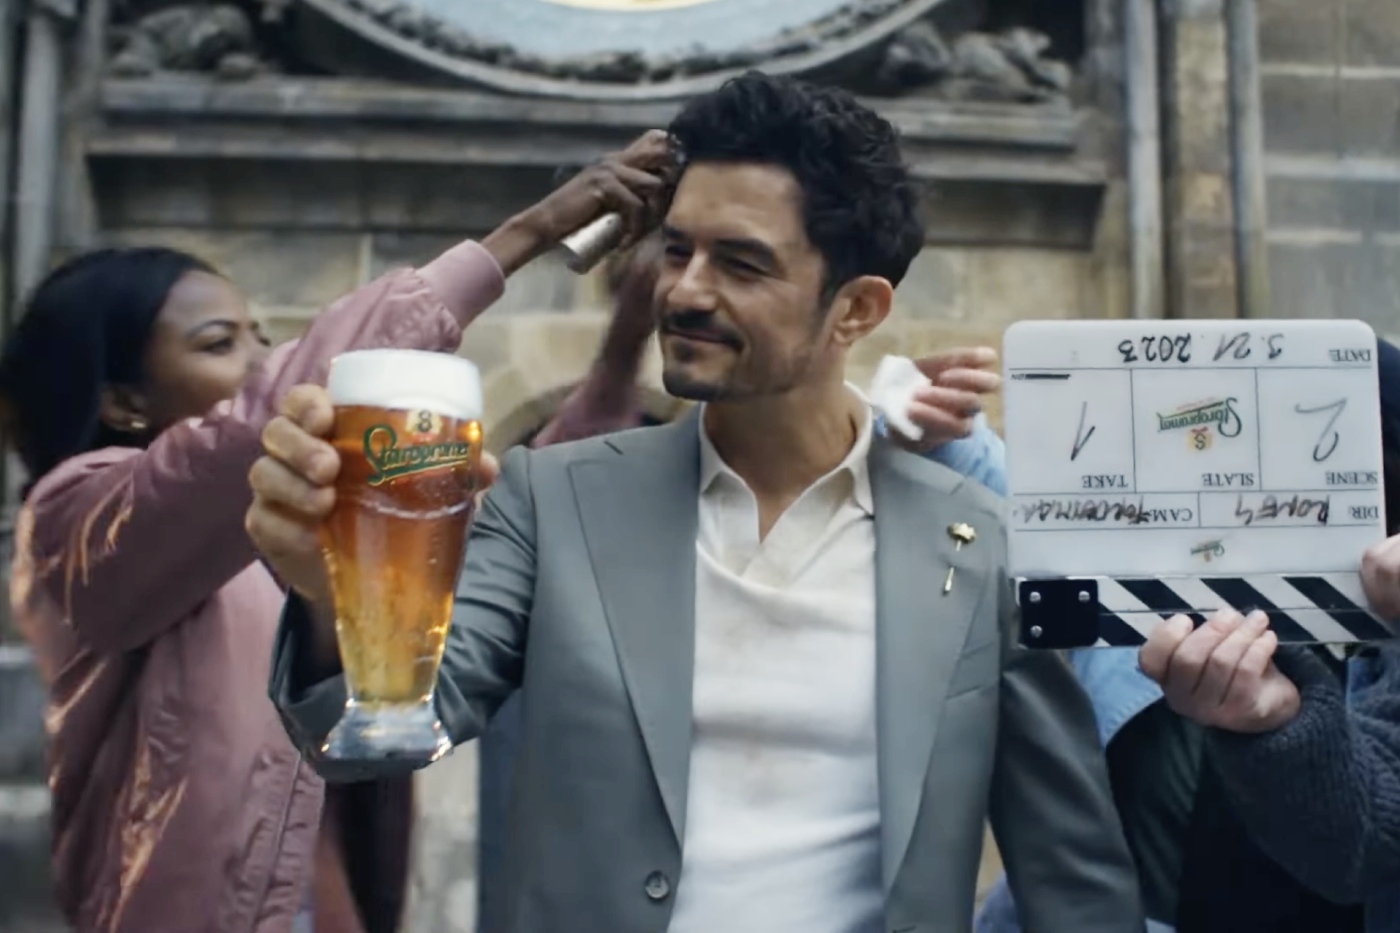 Orlando Bloom chválí české pivo v nové reklamě na pražský pivovar Staropramen